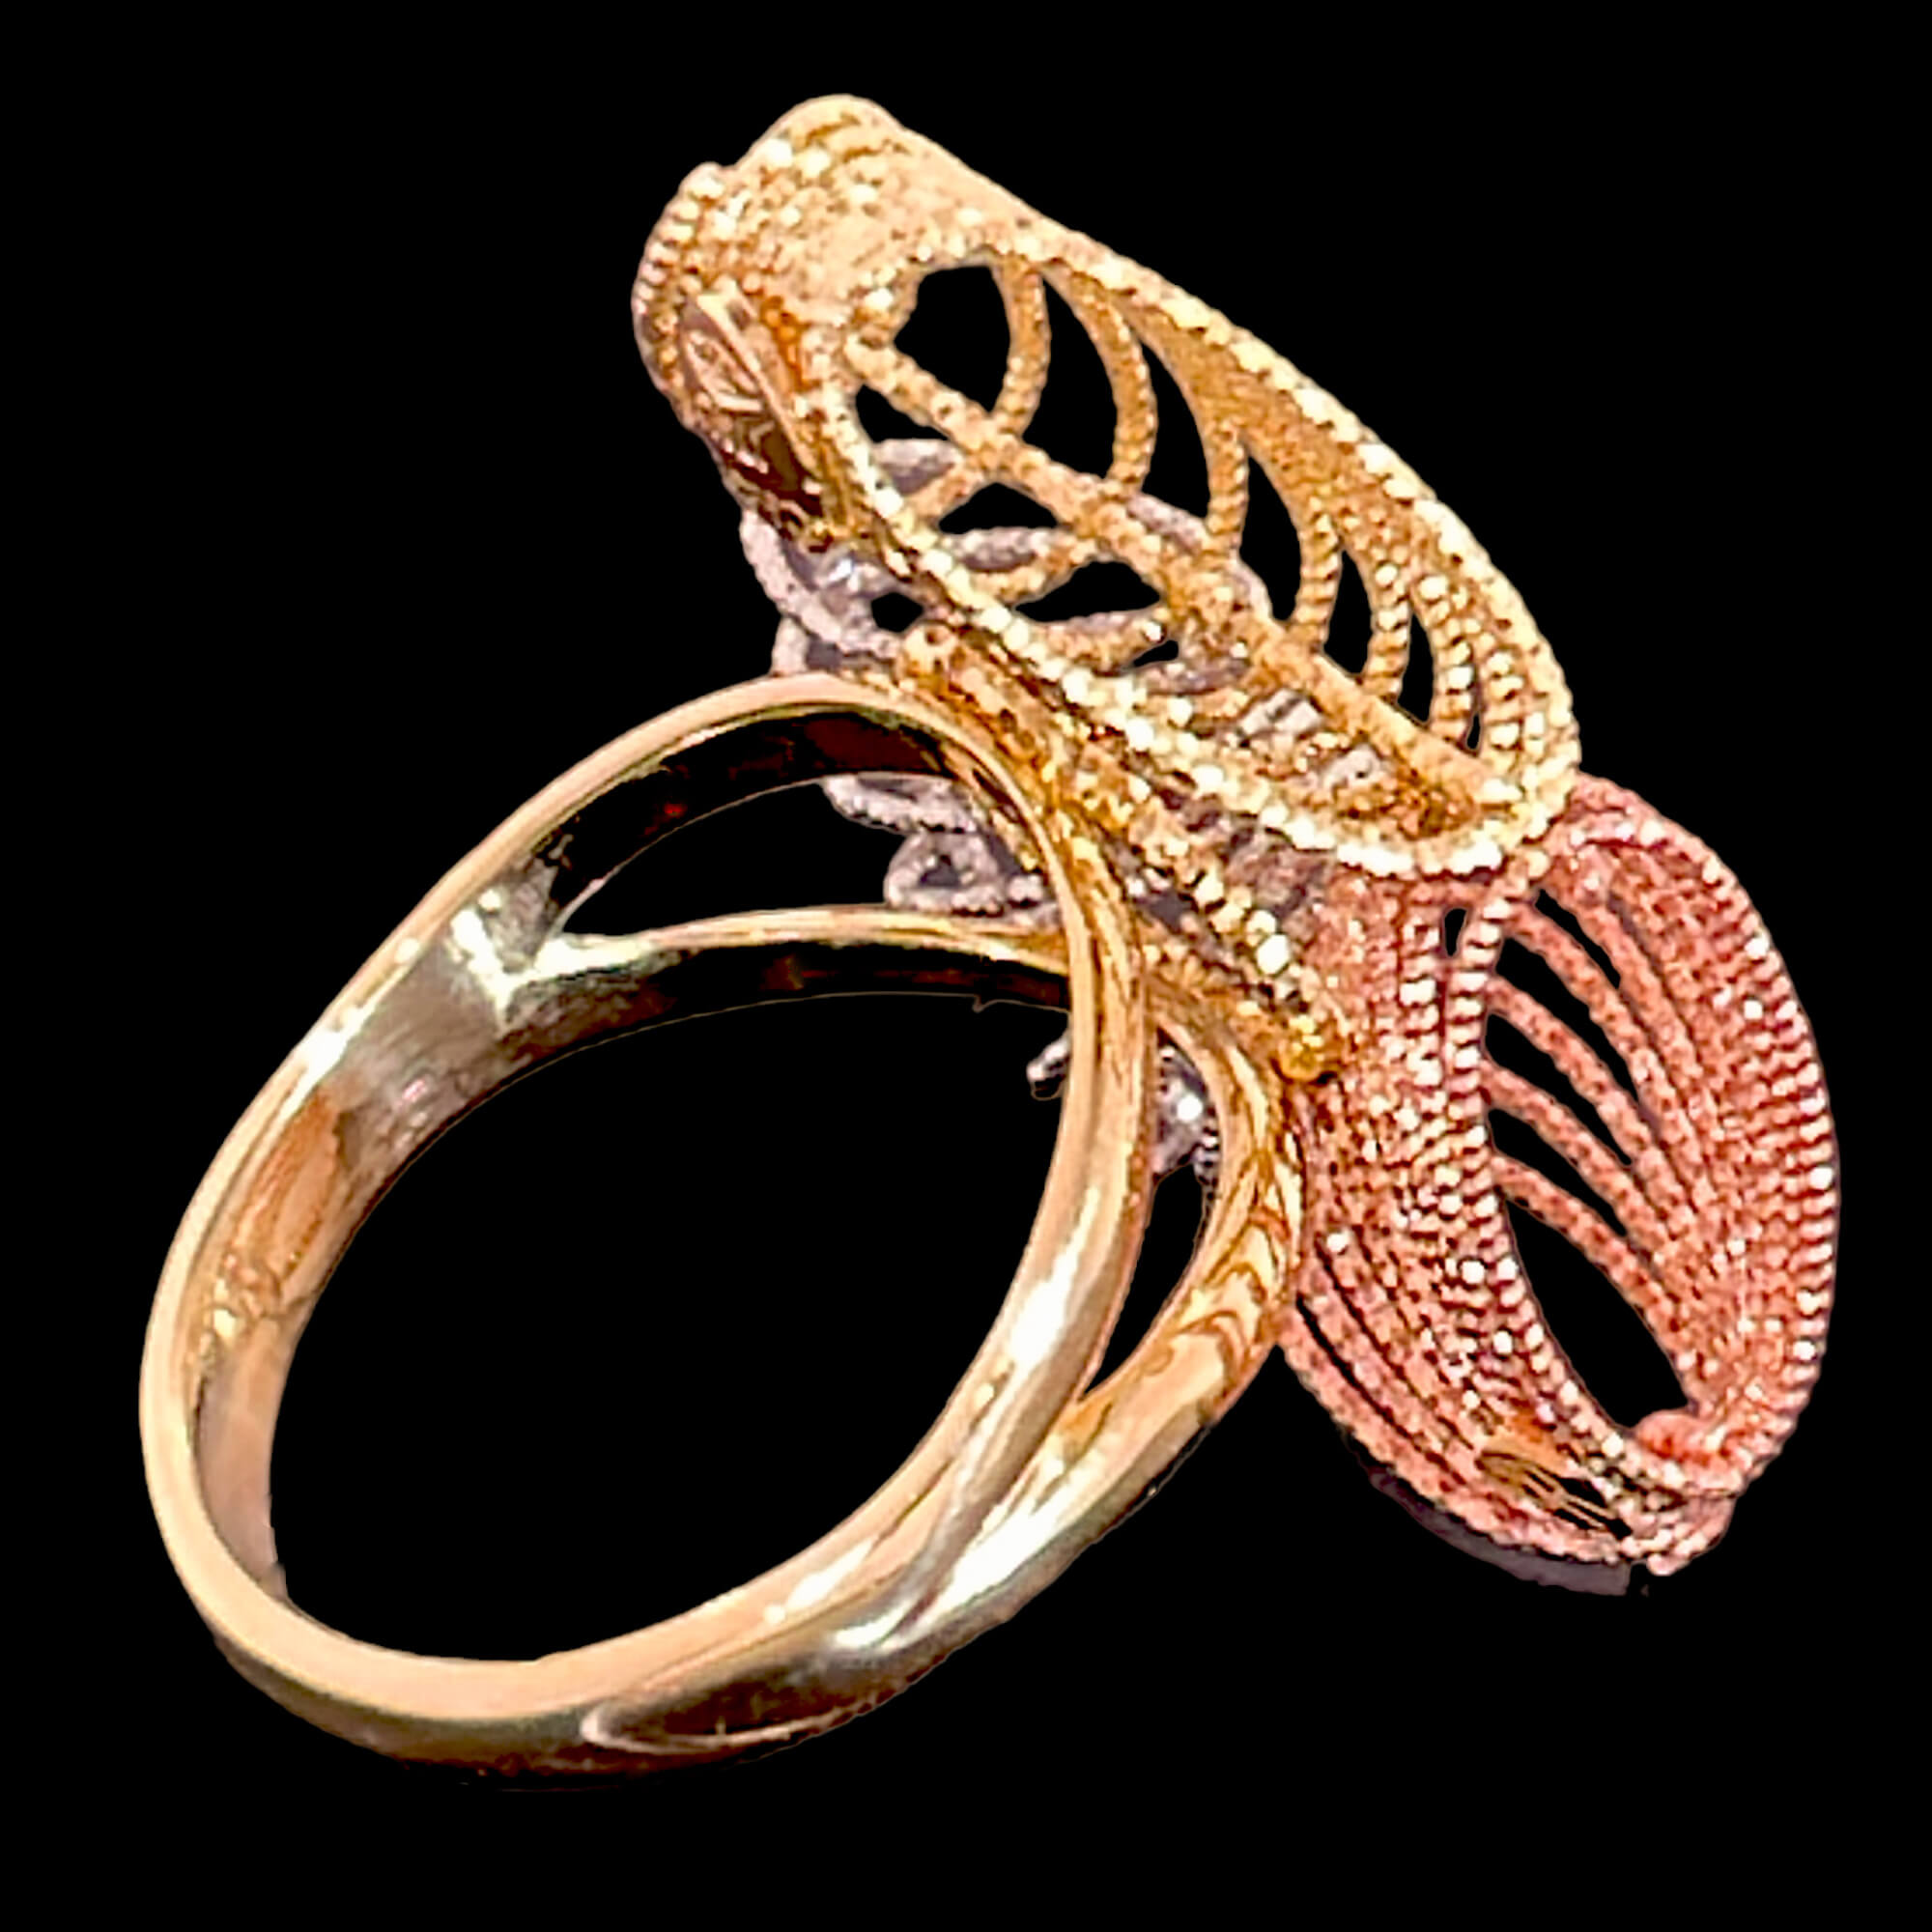 Bewerkte driekleurige ring van 18kt goud